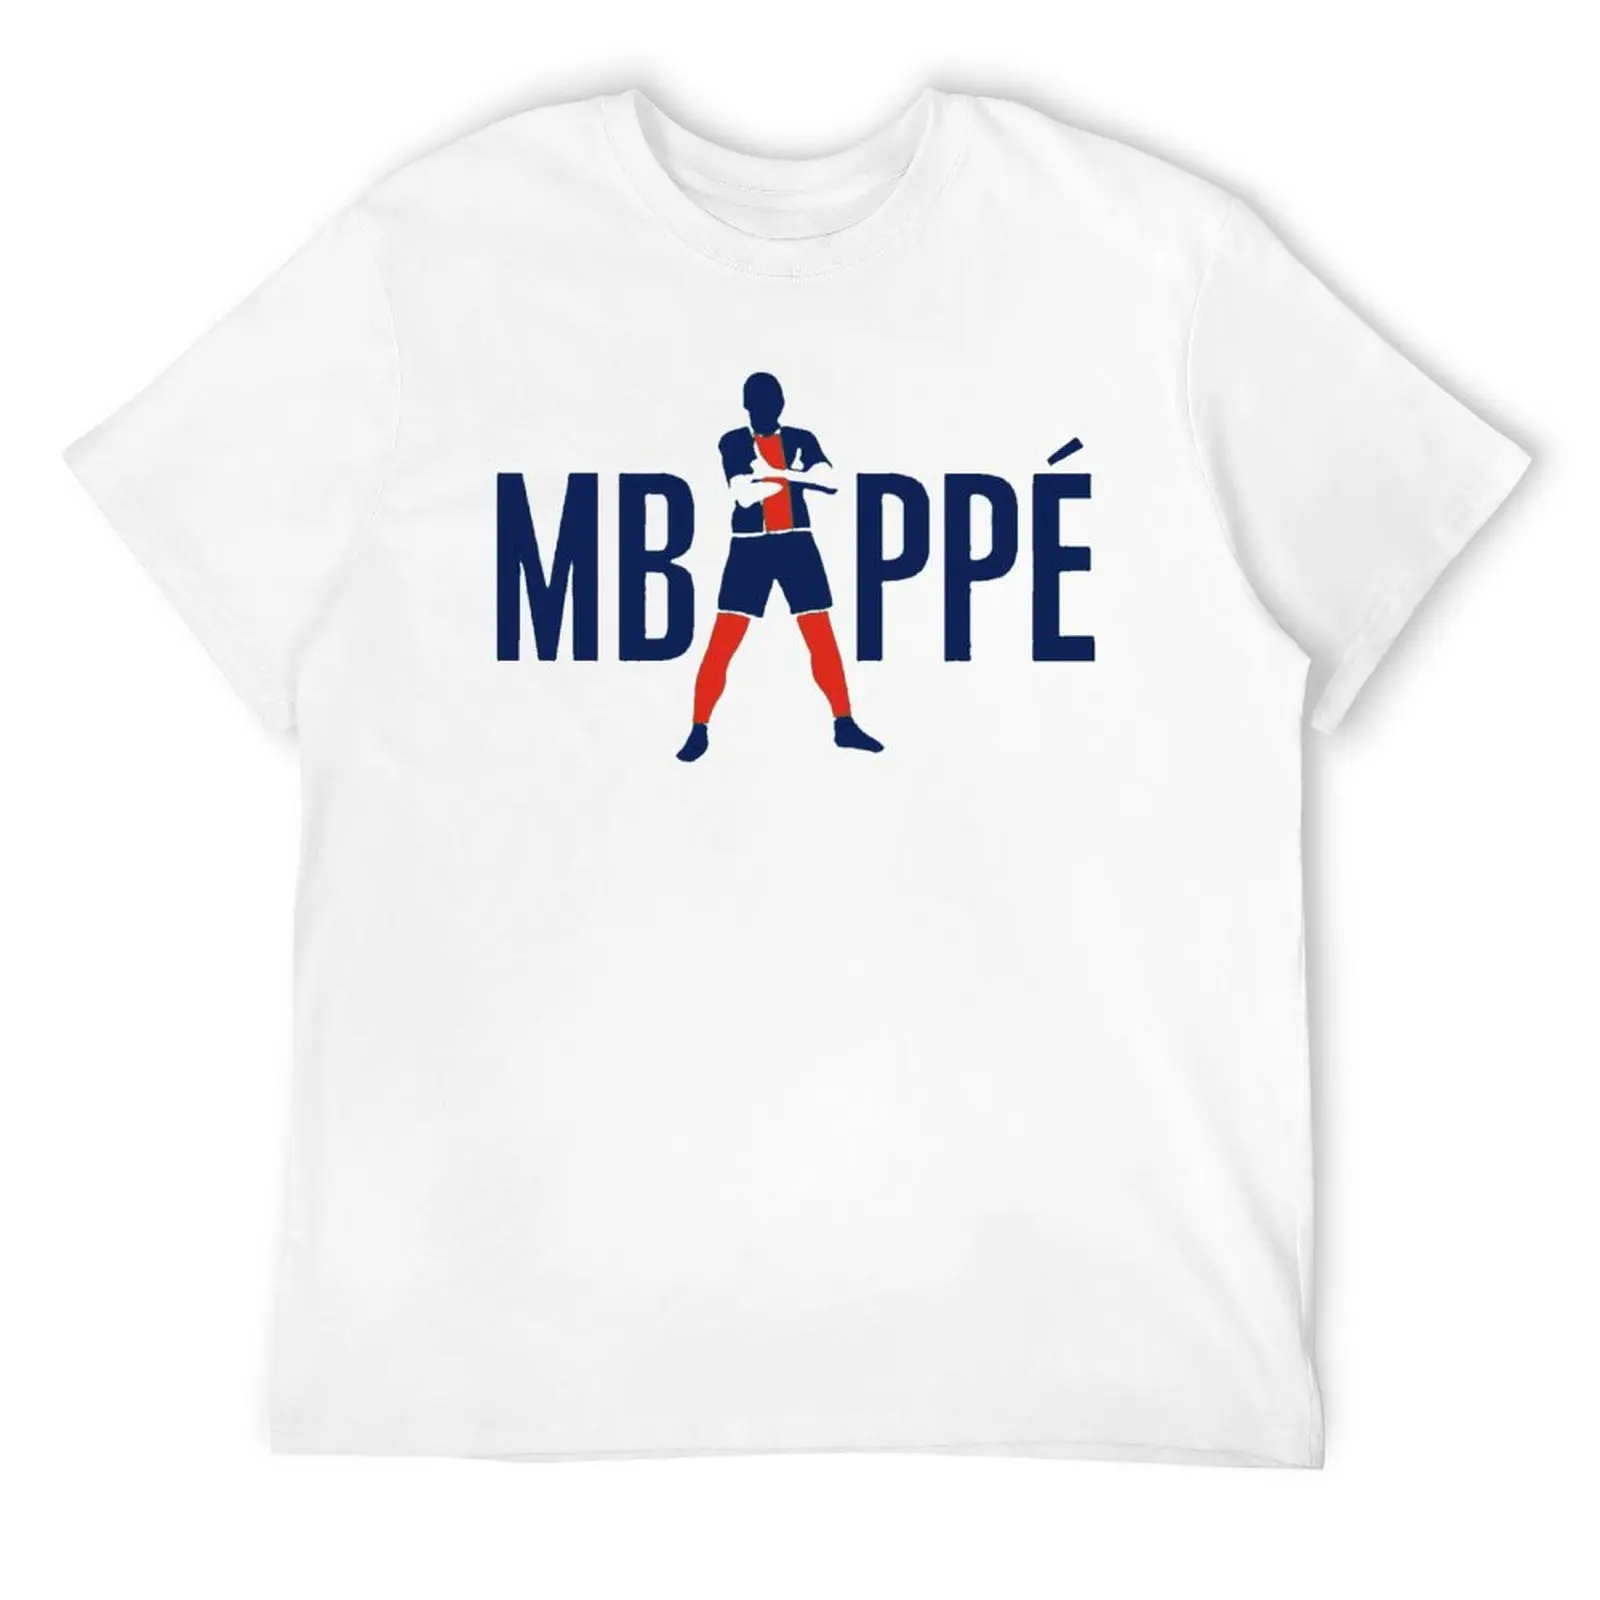 Tee shirt Mbappé